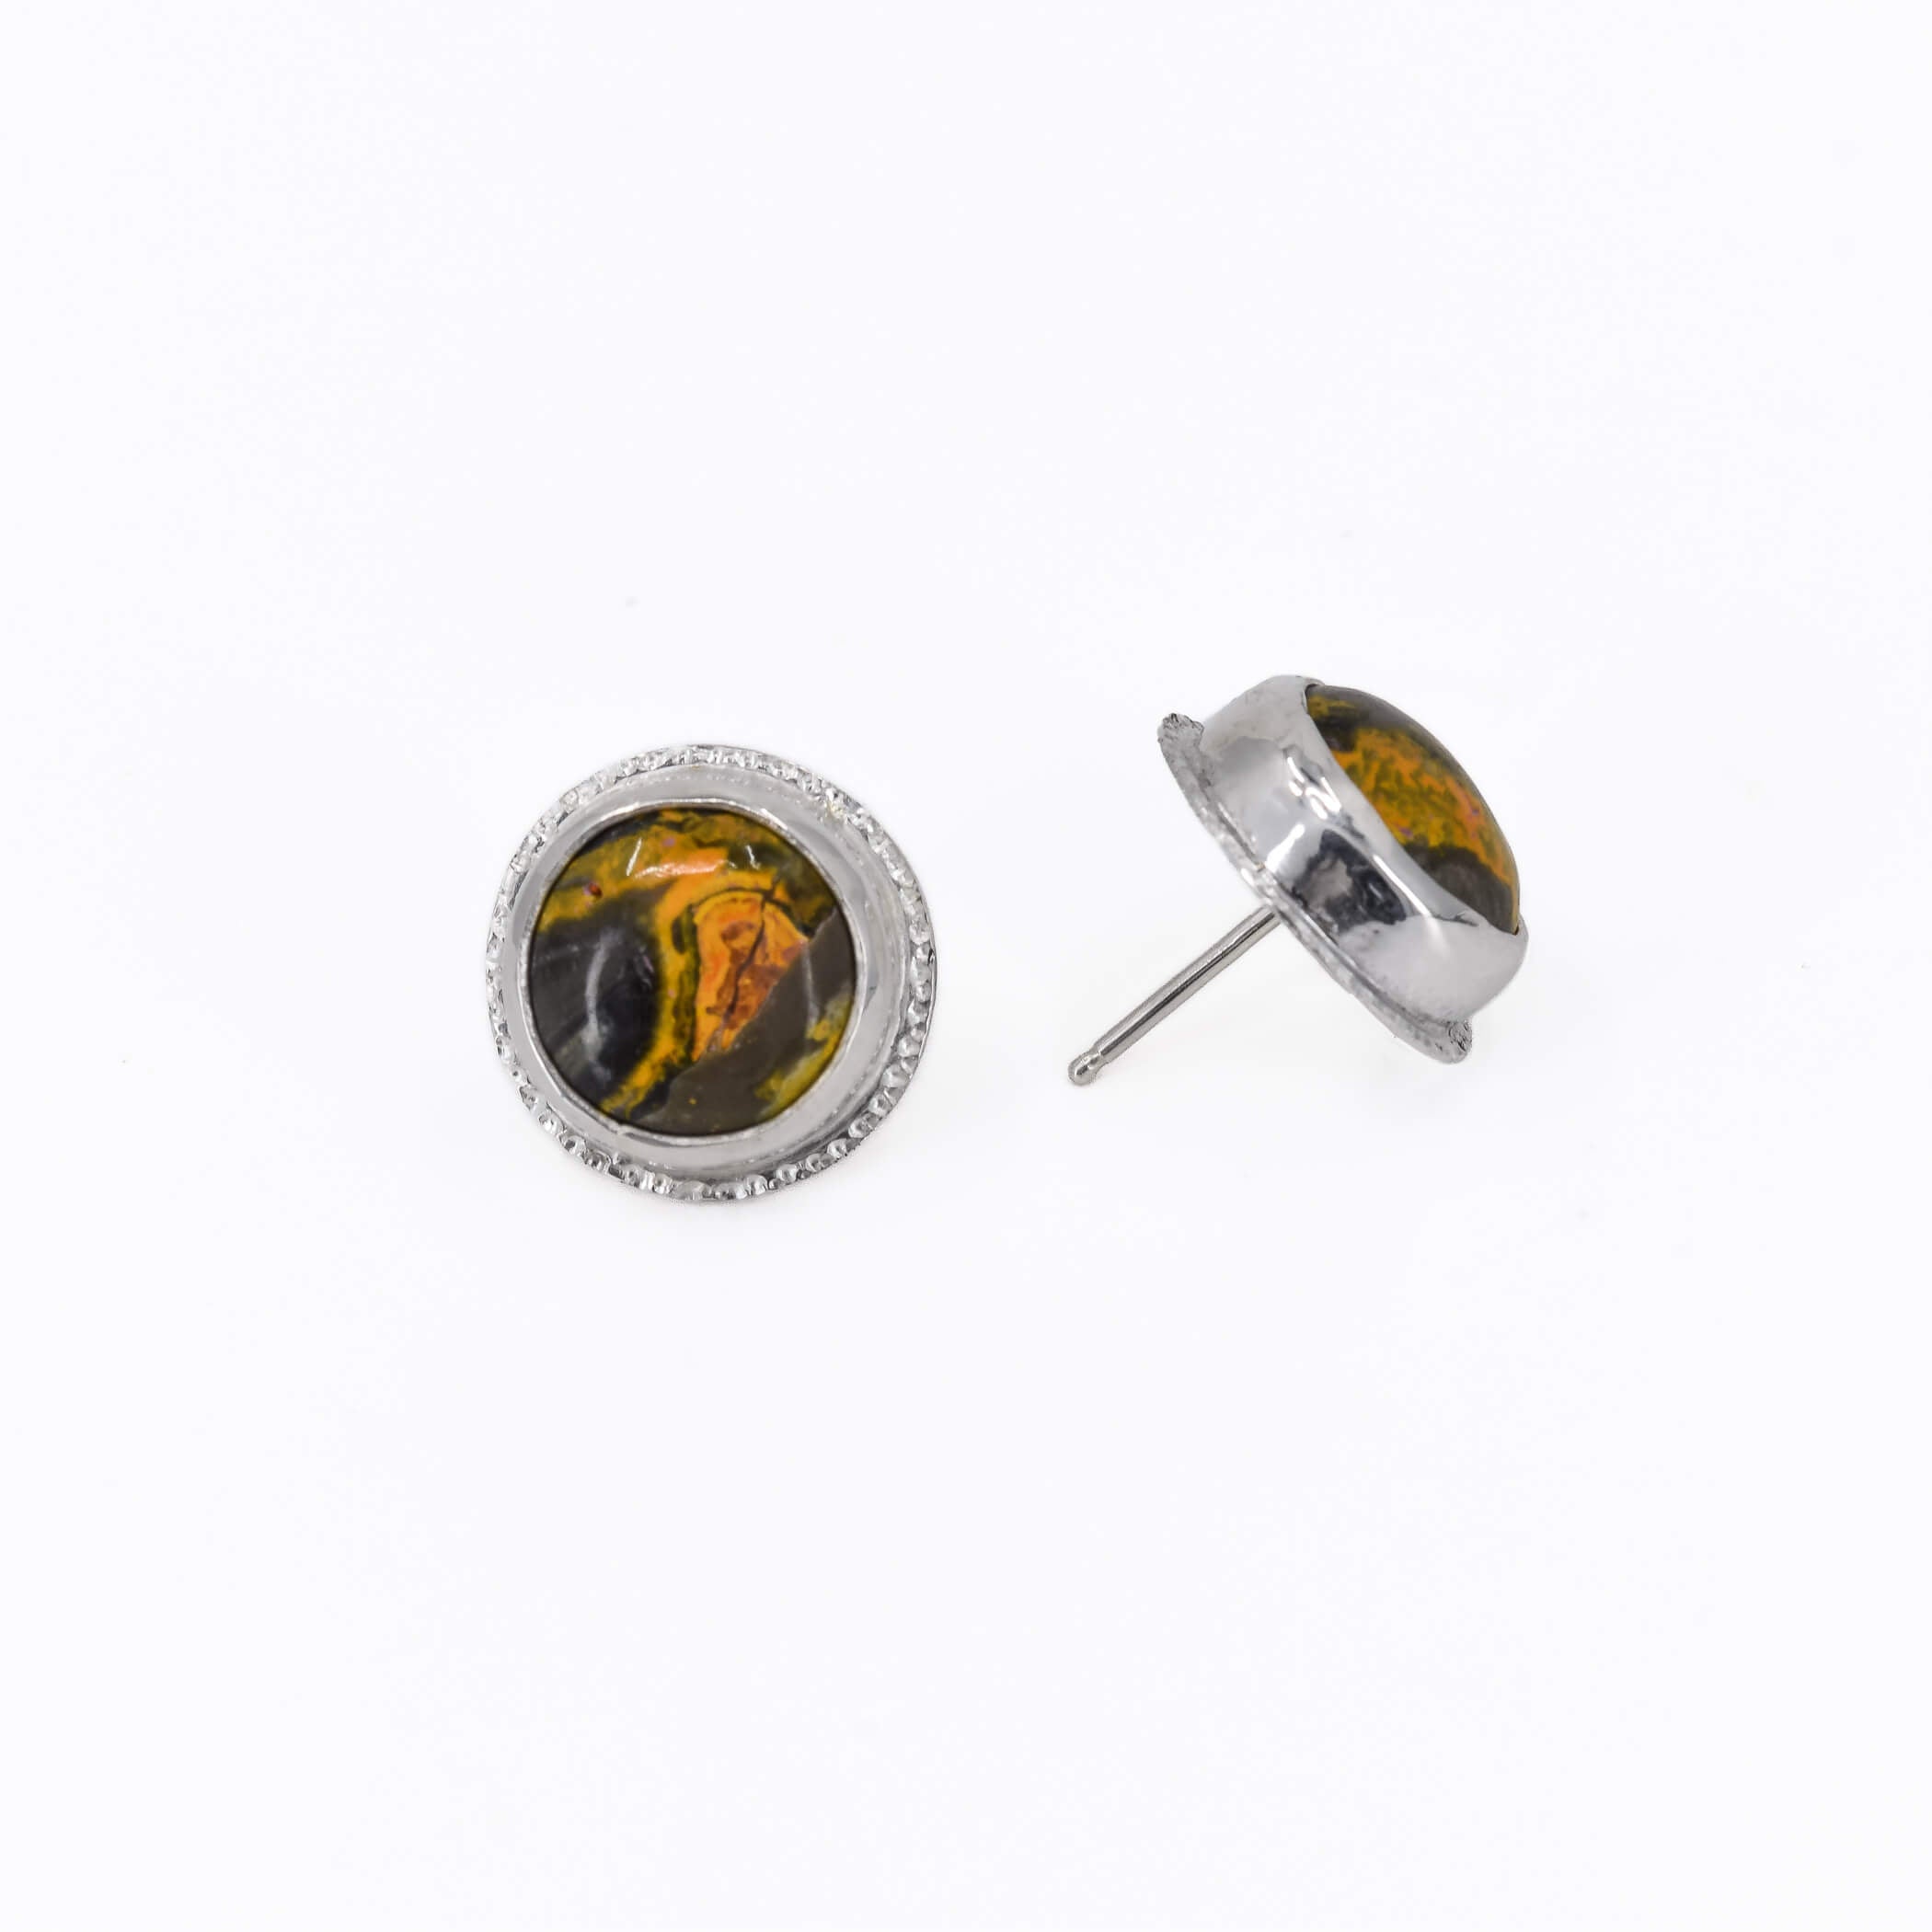 Round bumblebee jasper stud earrings in sterling silver